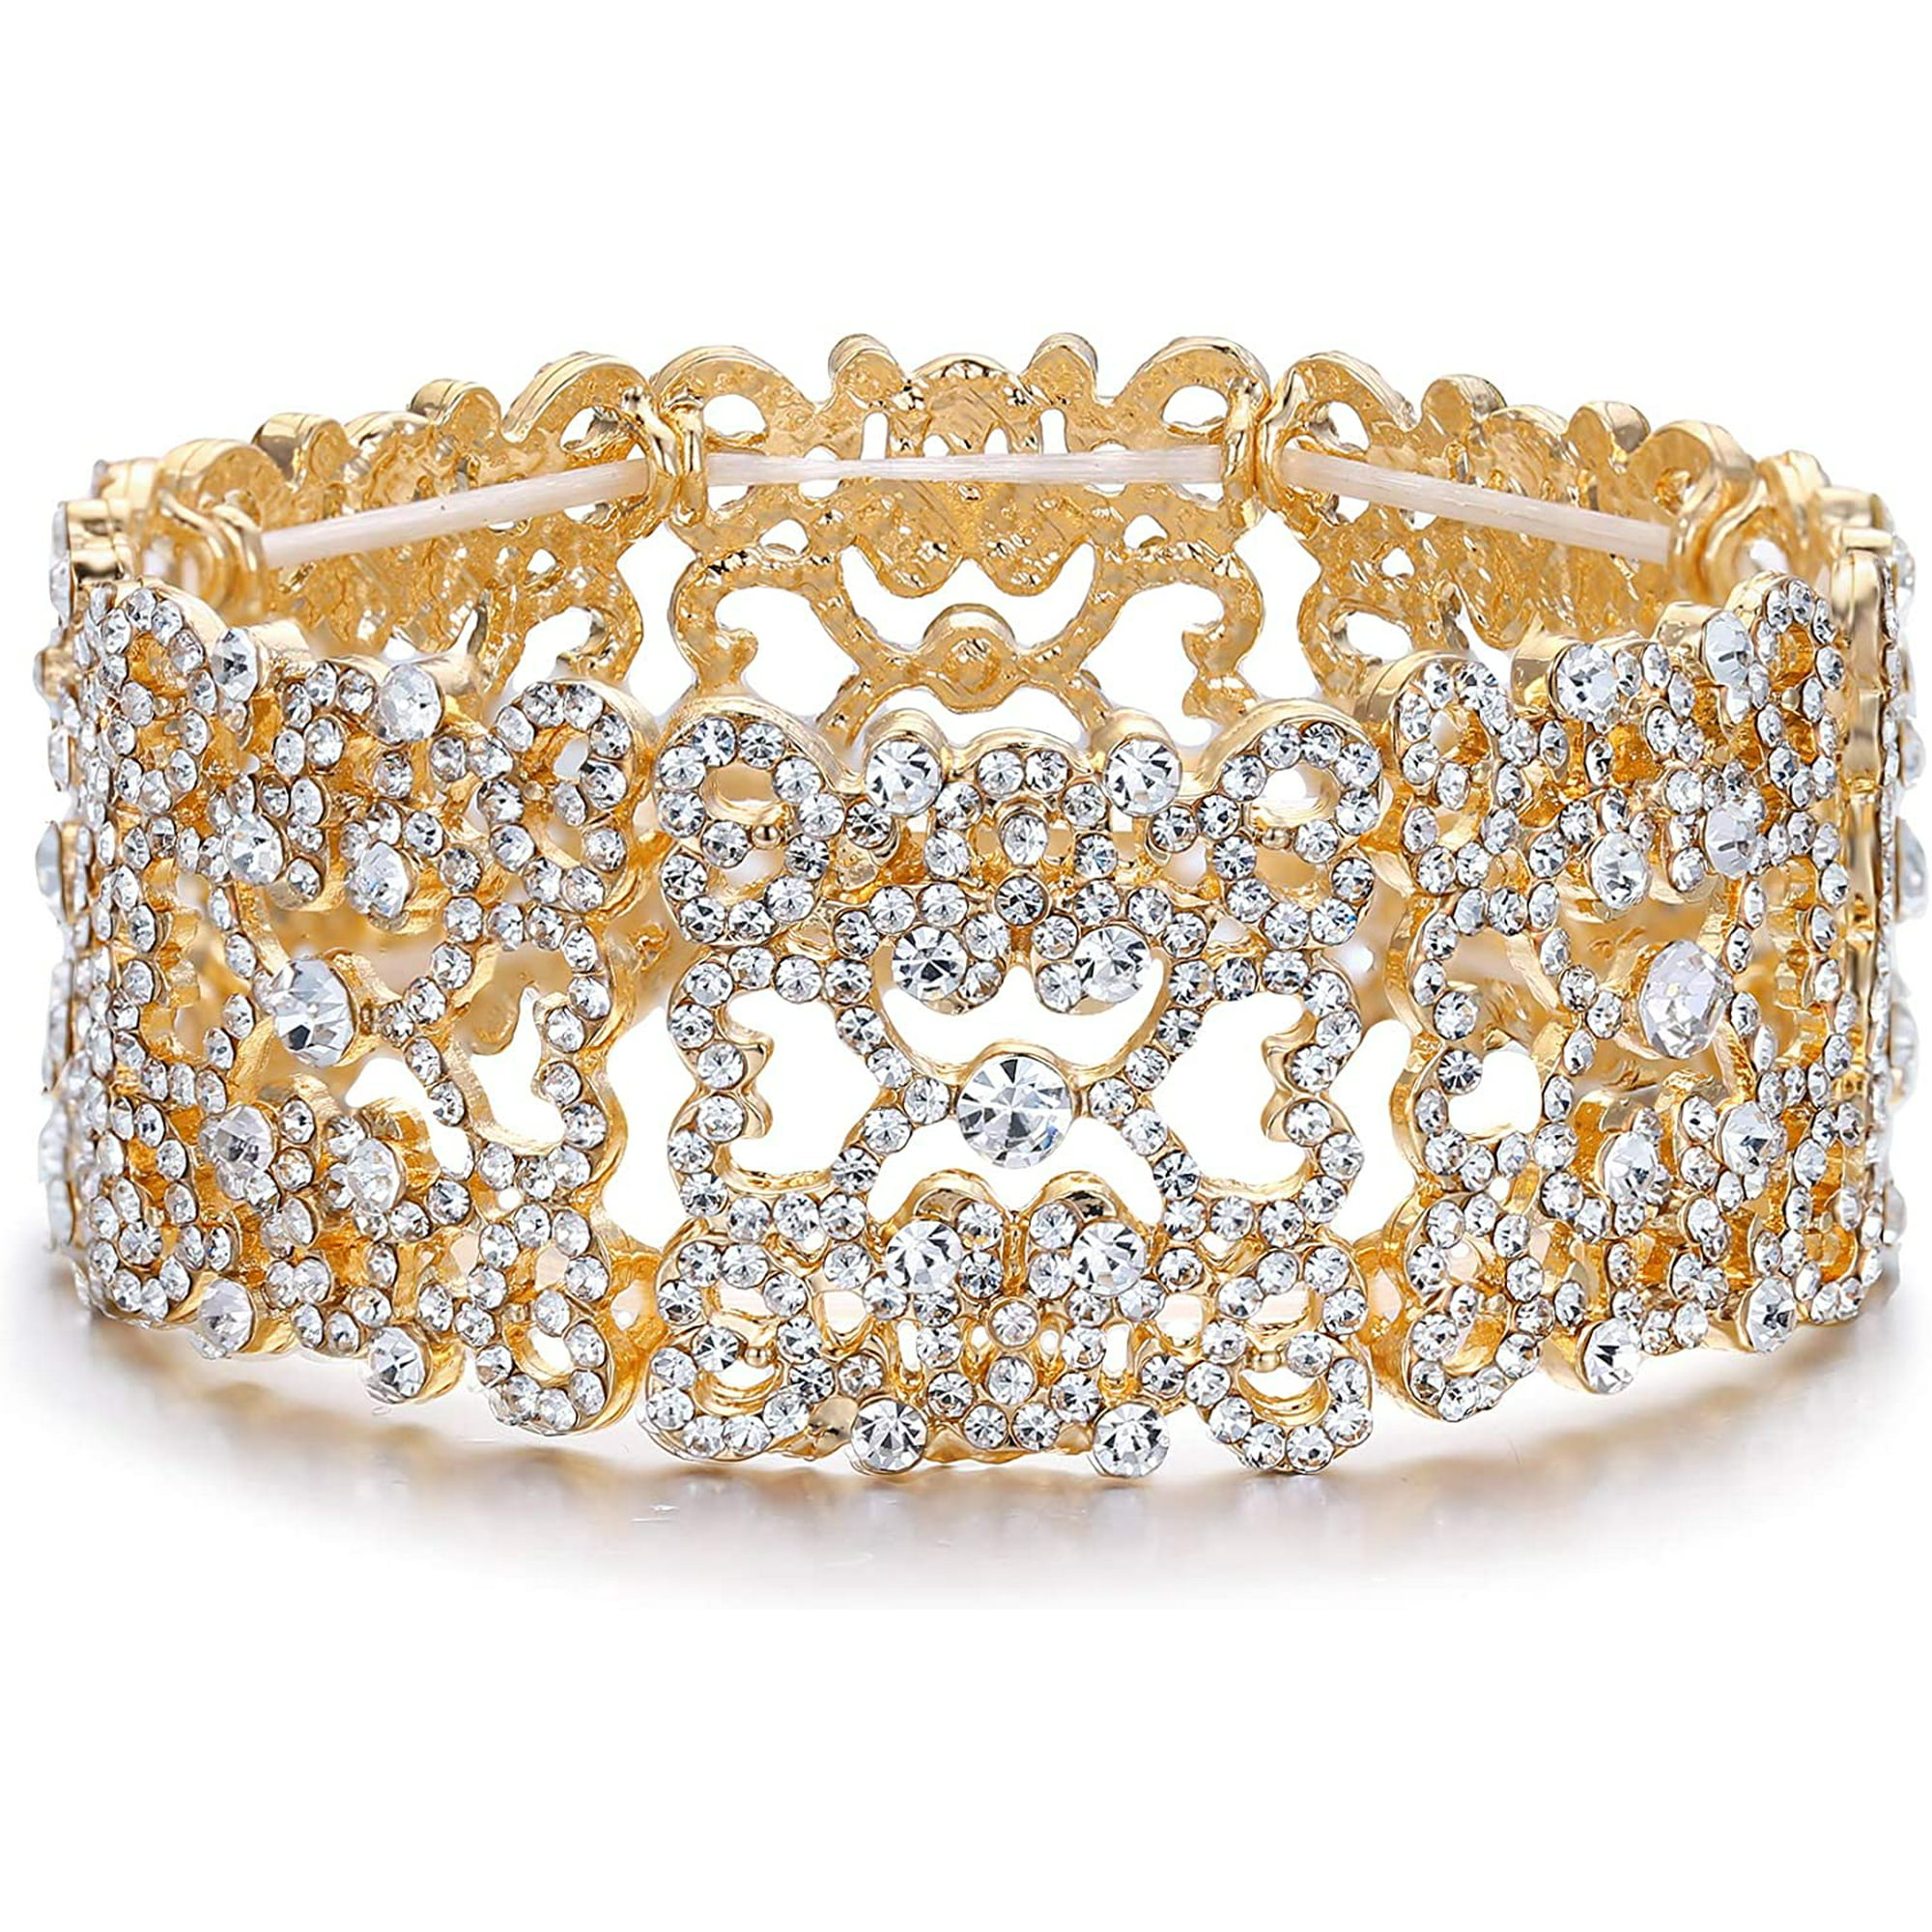 18K Yellow Gold Filled Bracelet Chain 8.2" Unique Charm Link GF Wedding Jewelry